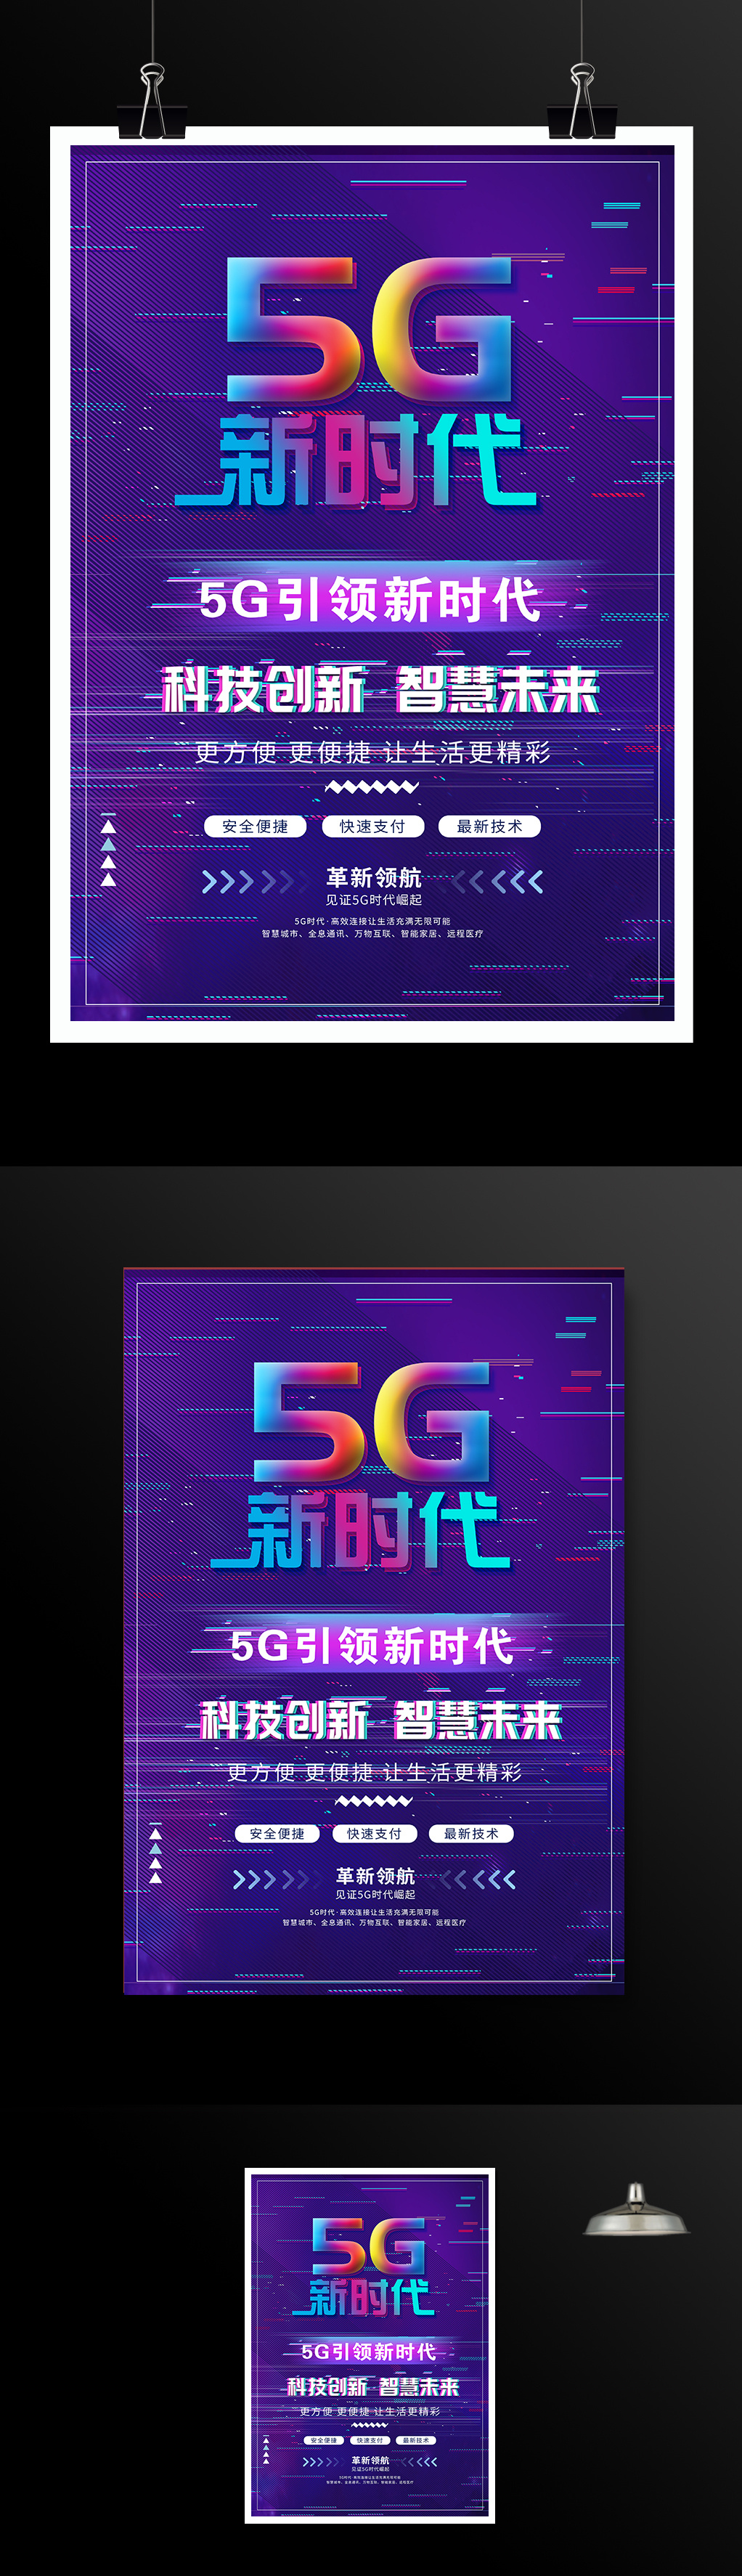 5G新时代宣传海报